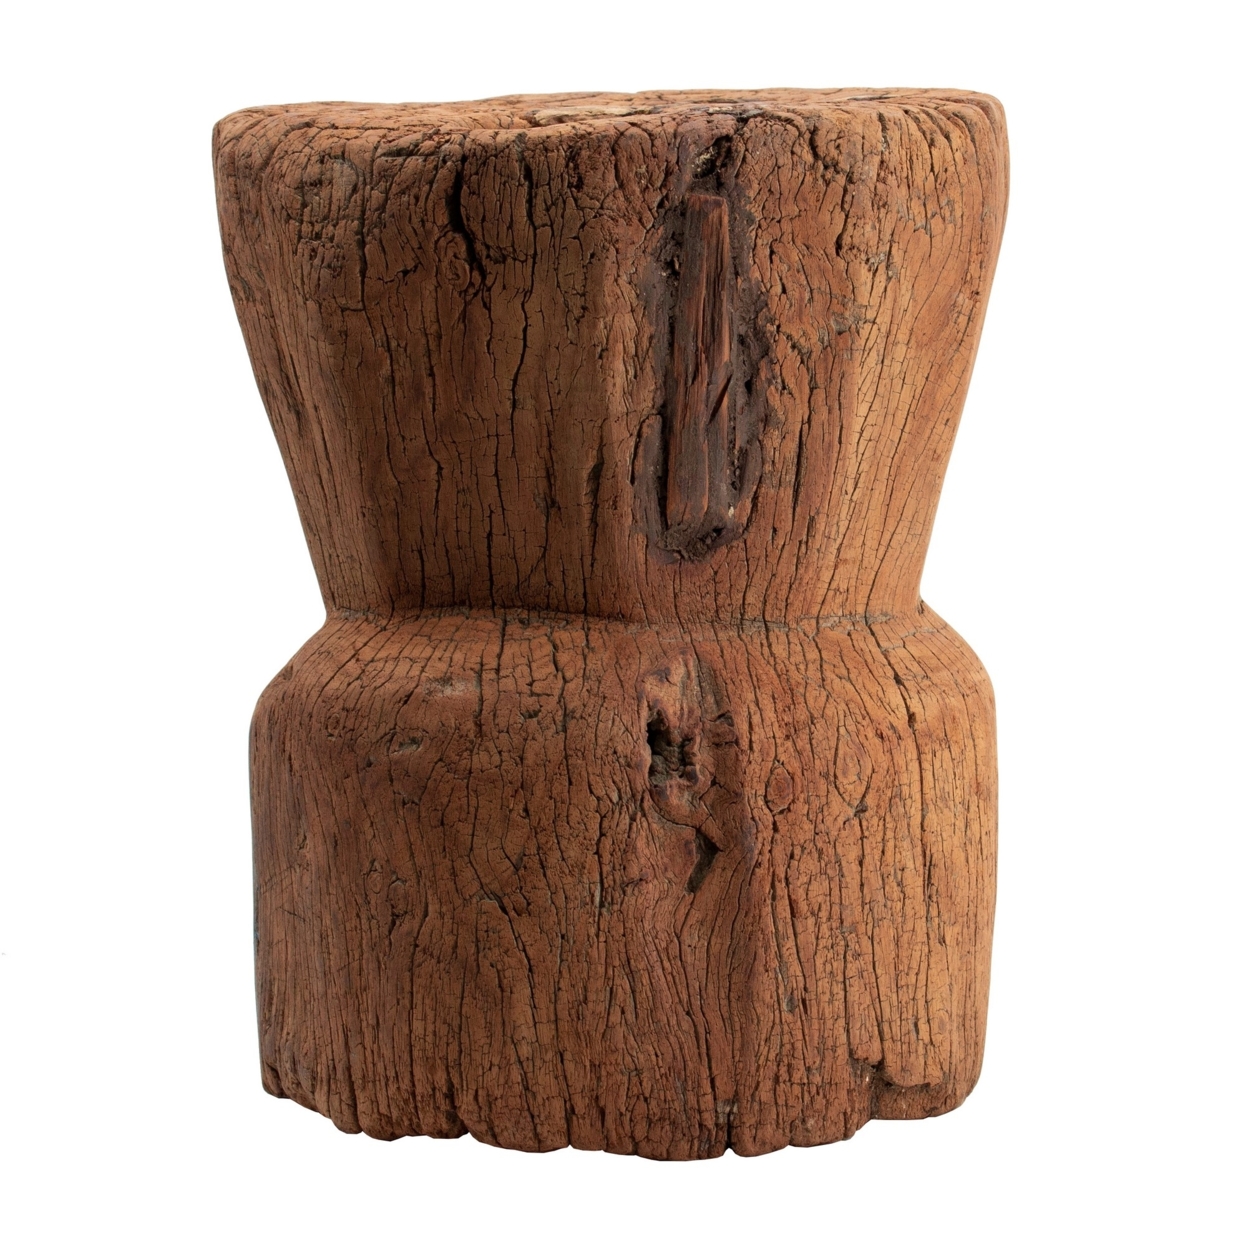 14 Inch Stool Table, Rustic Style, Tree Log Design, Distressed Wood Brown, Saltoro Sherpi